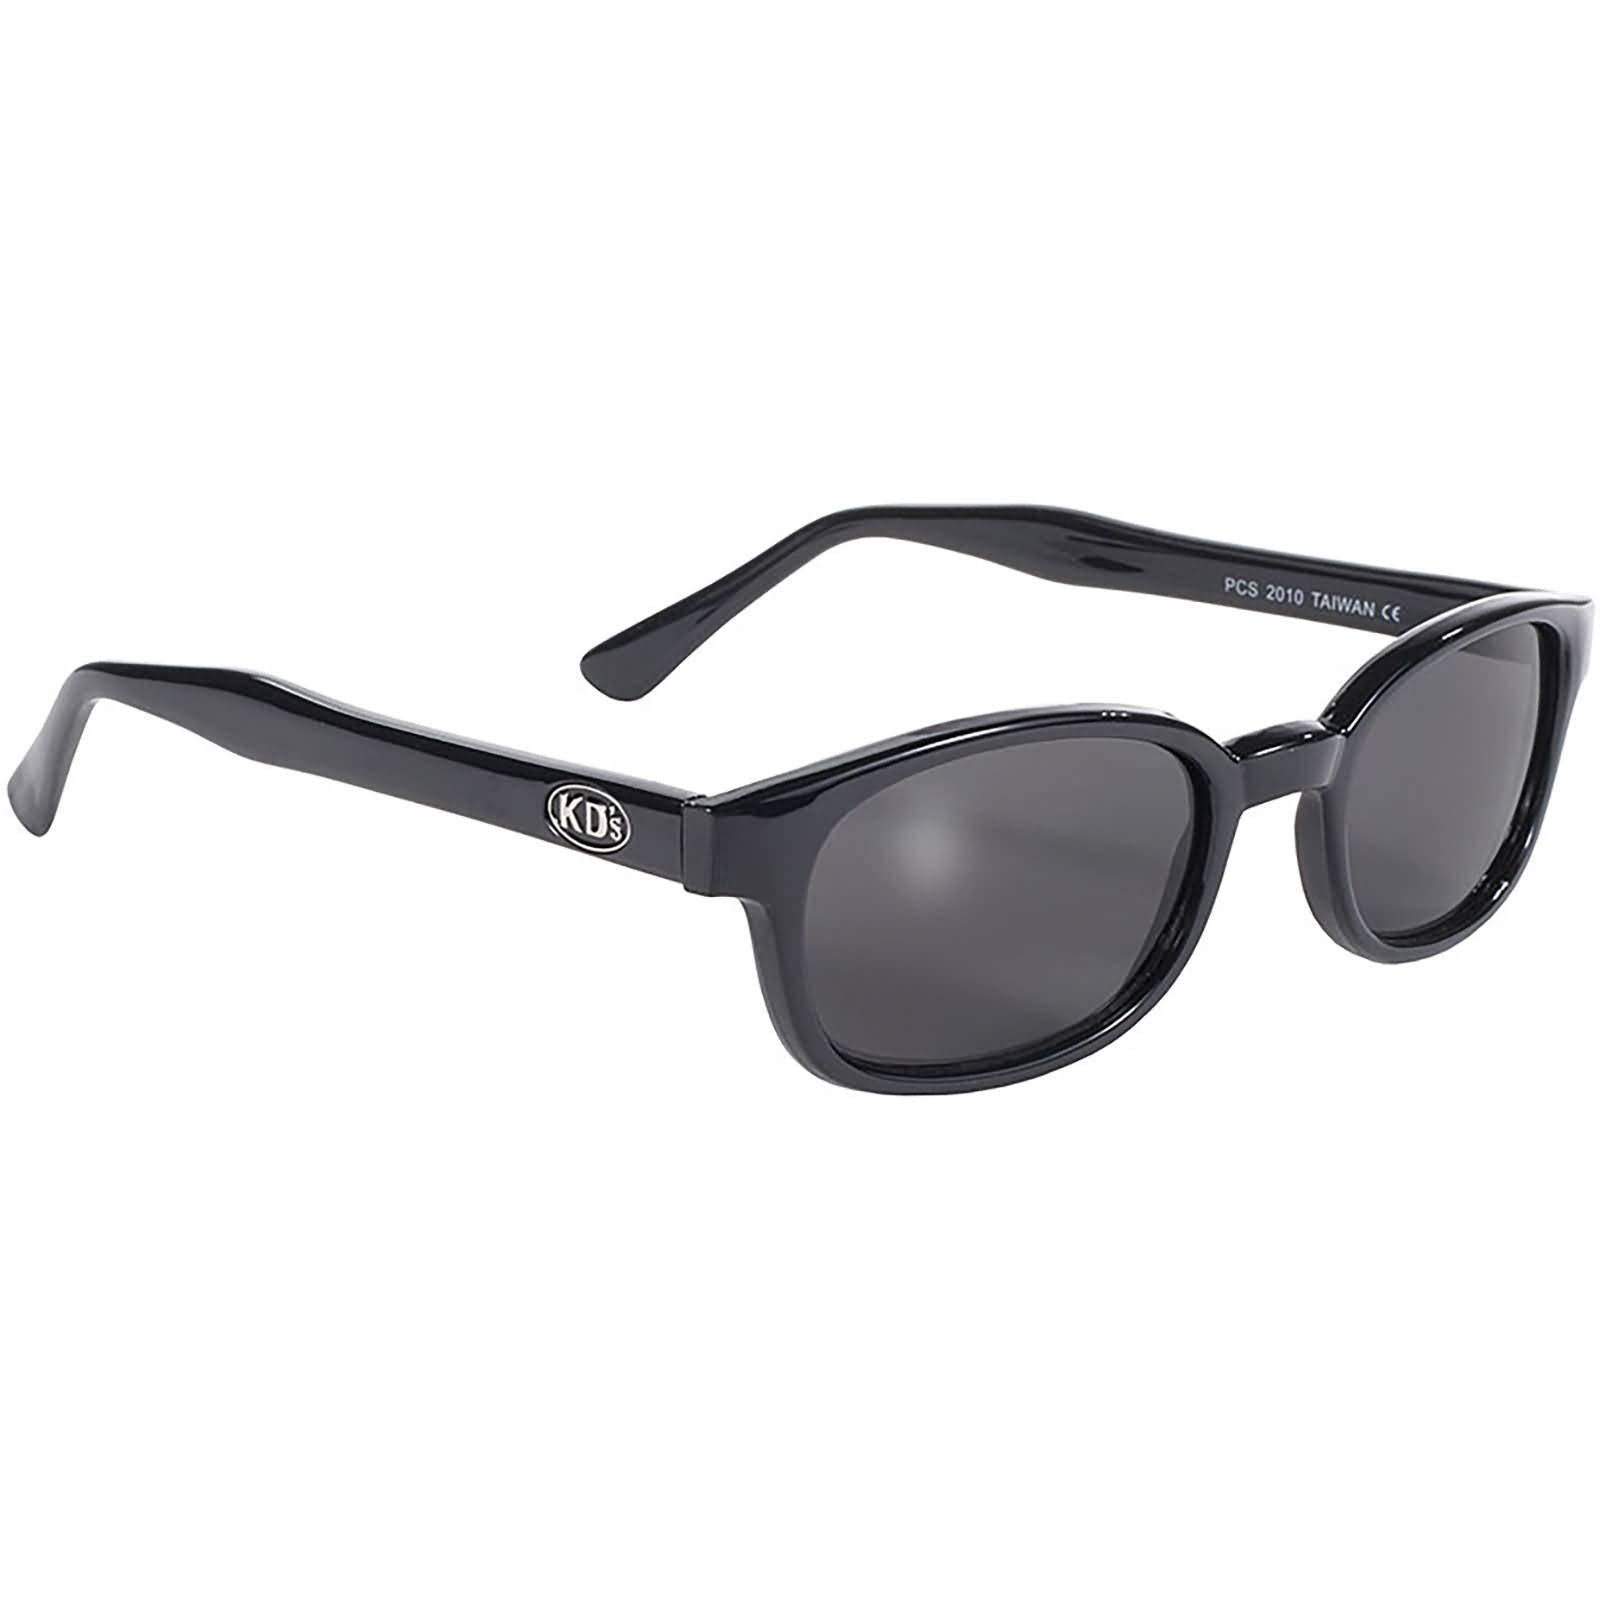 KD Original 2010 Adult Lifestyle Sunglasses-15-5950